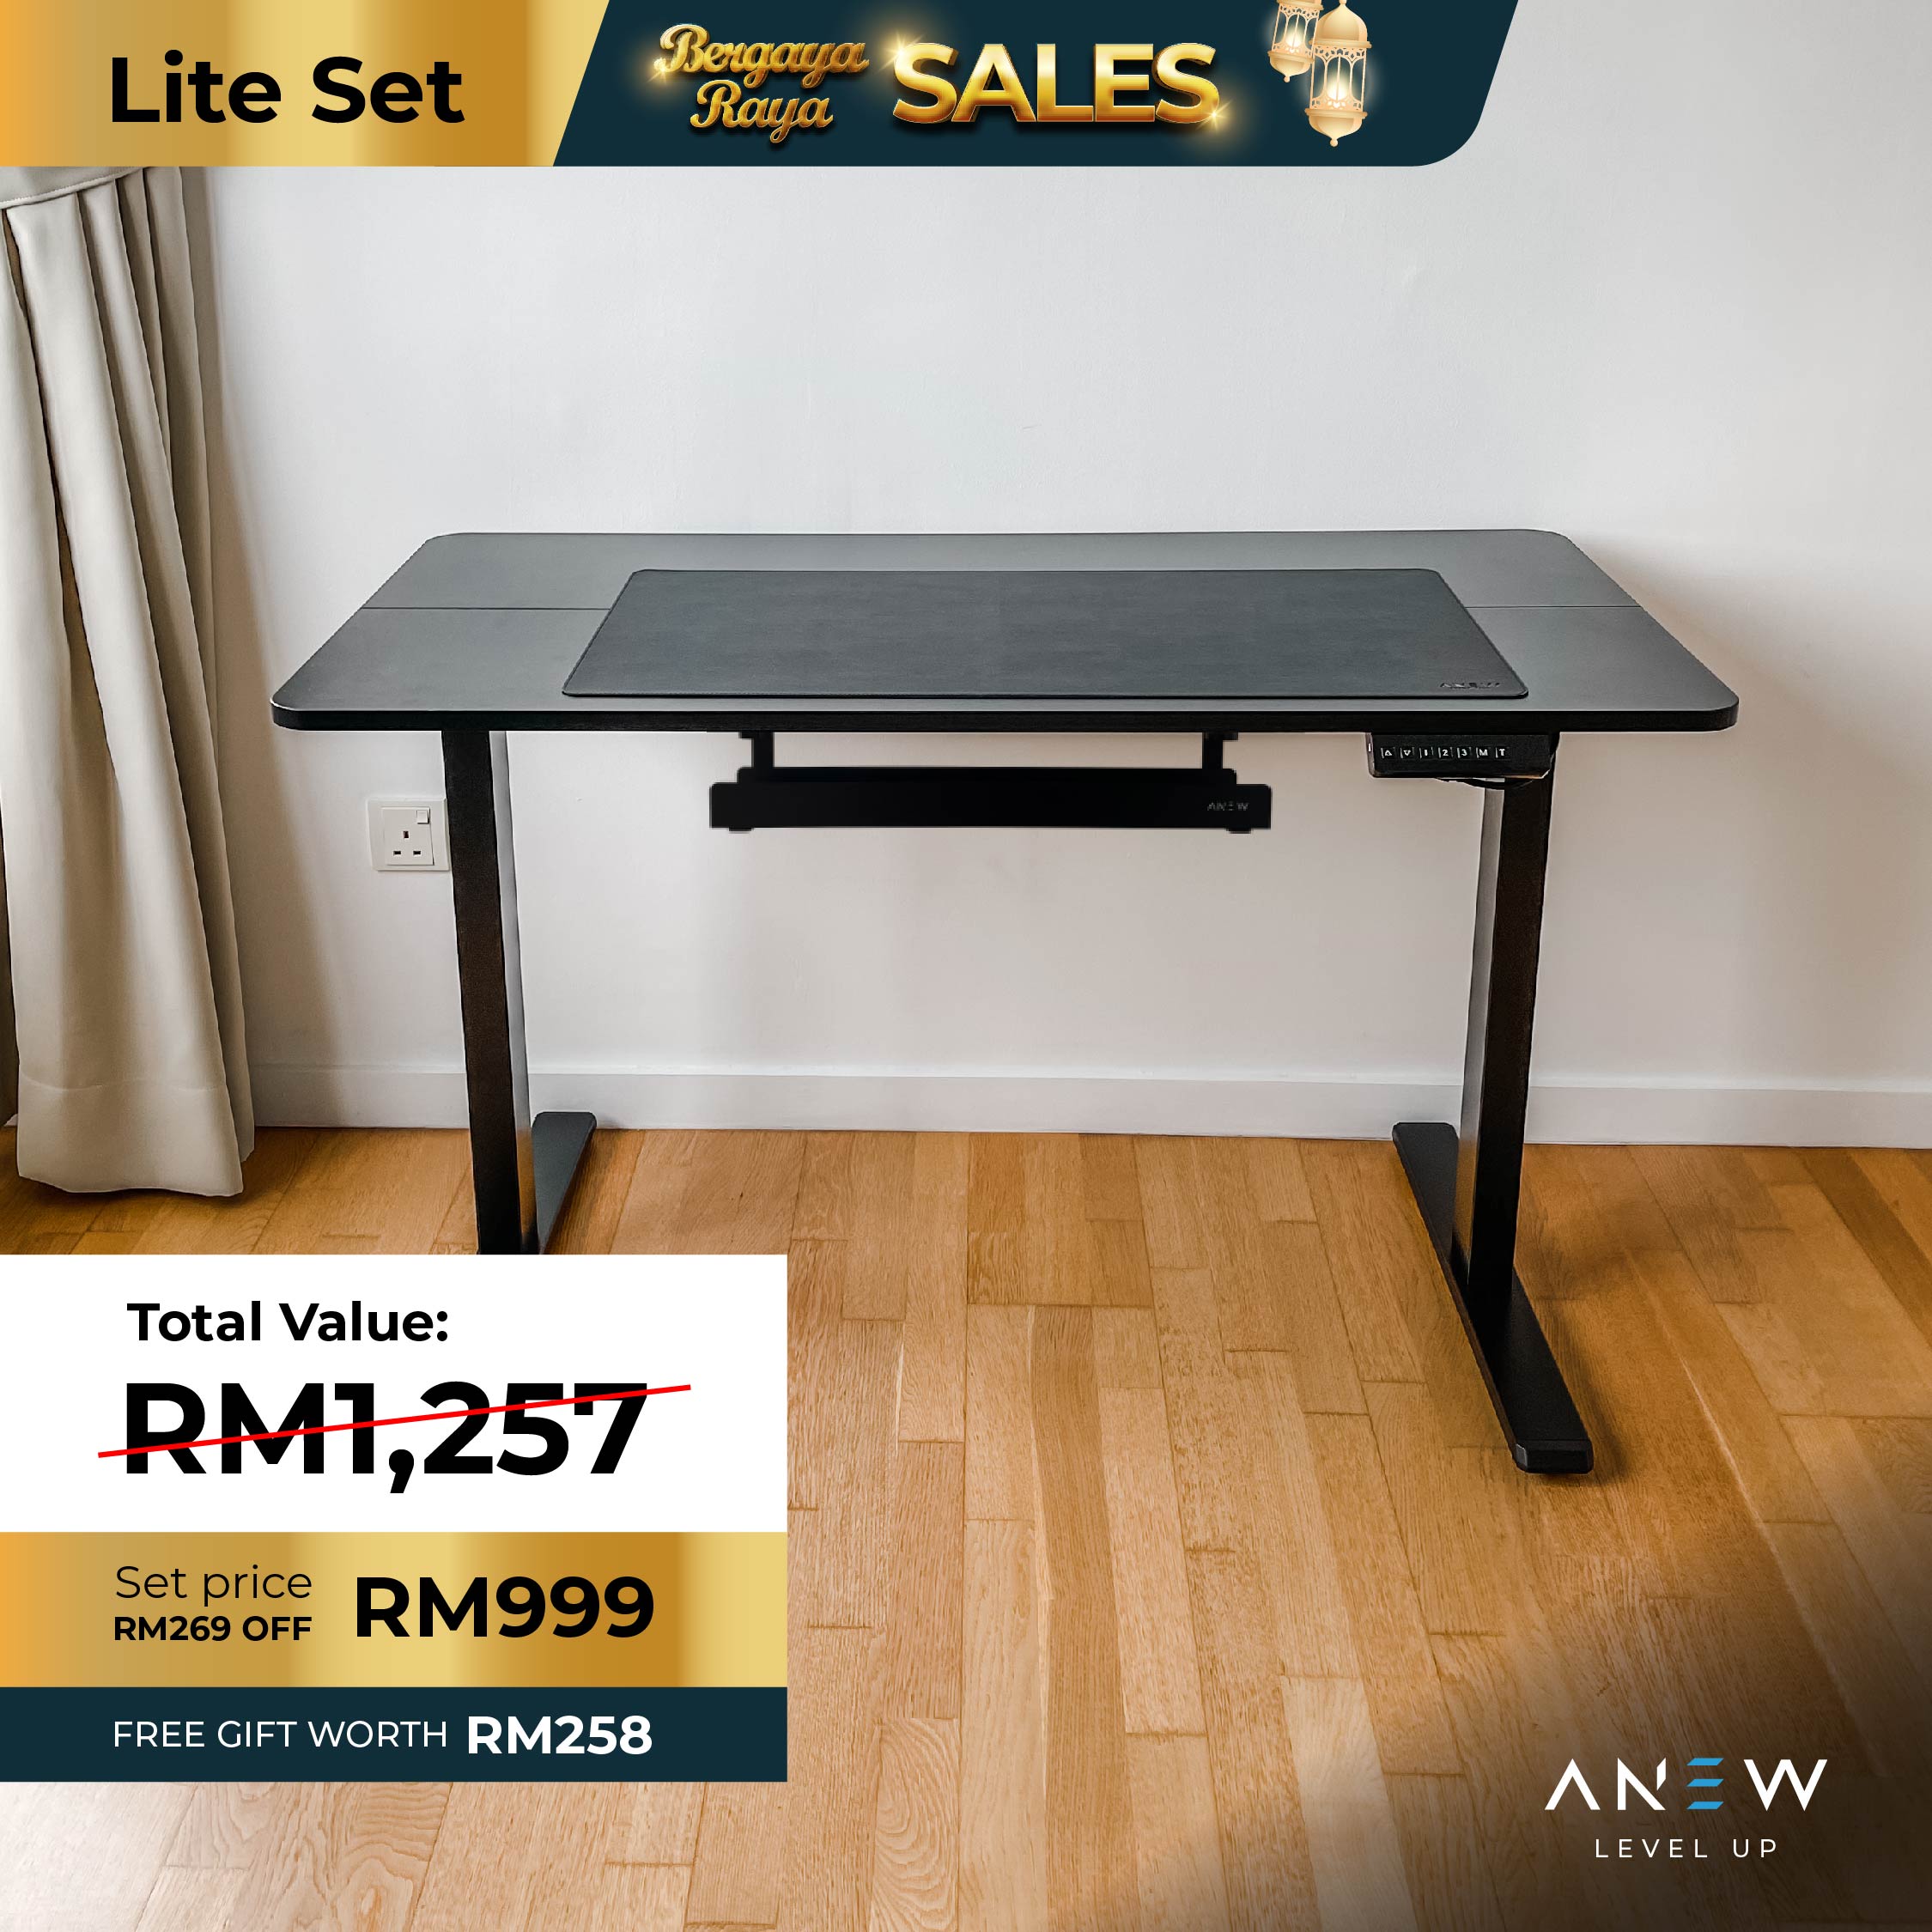 ANEW Standard Smart Desk - Lite Set c/w Free Gift worth RM258